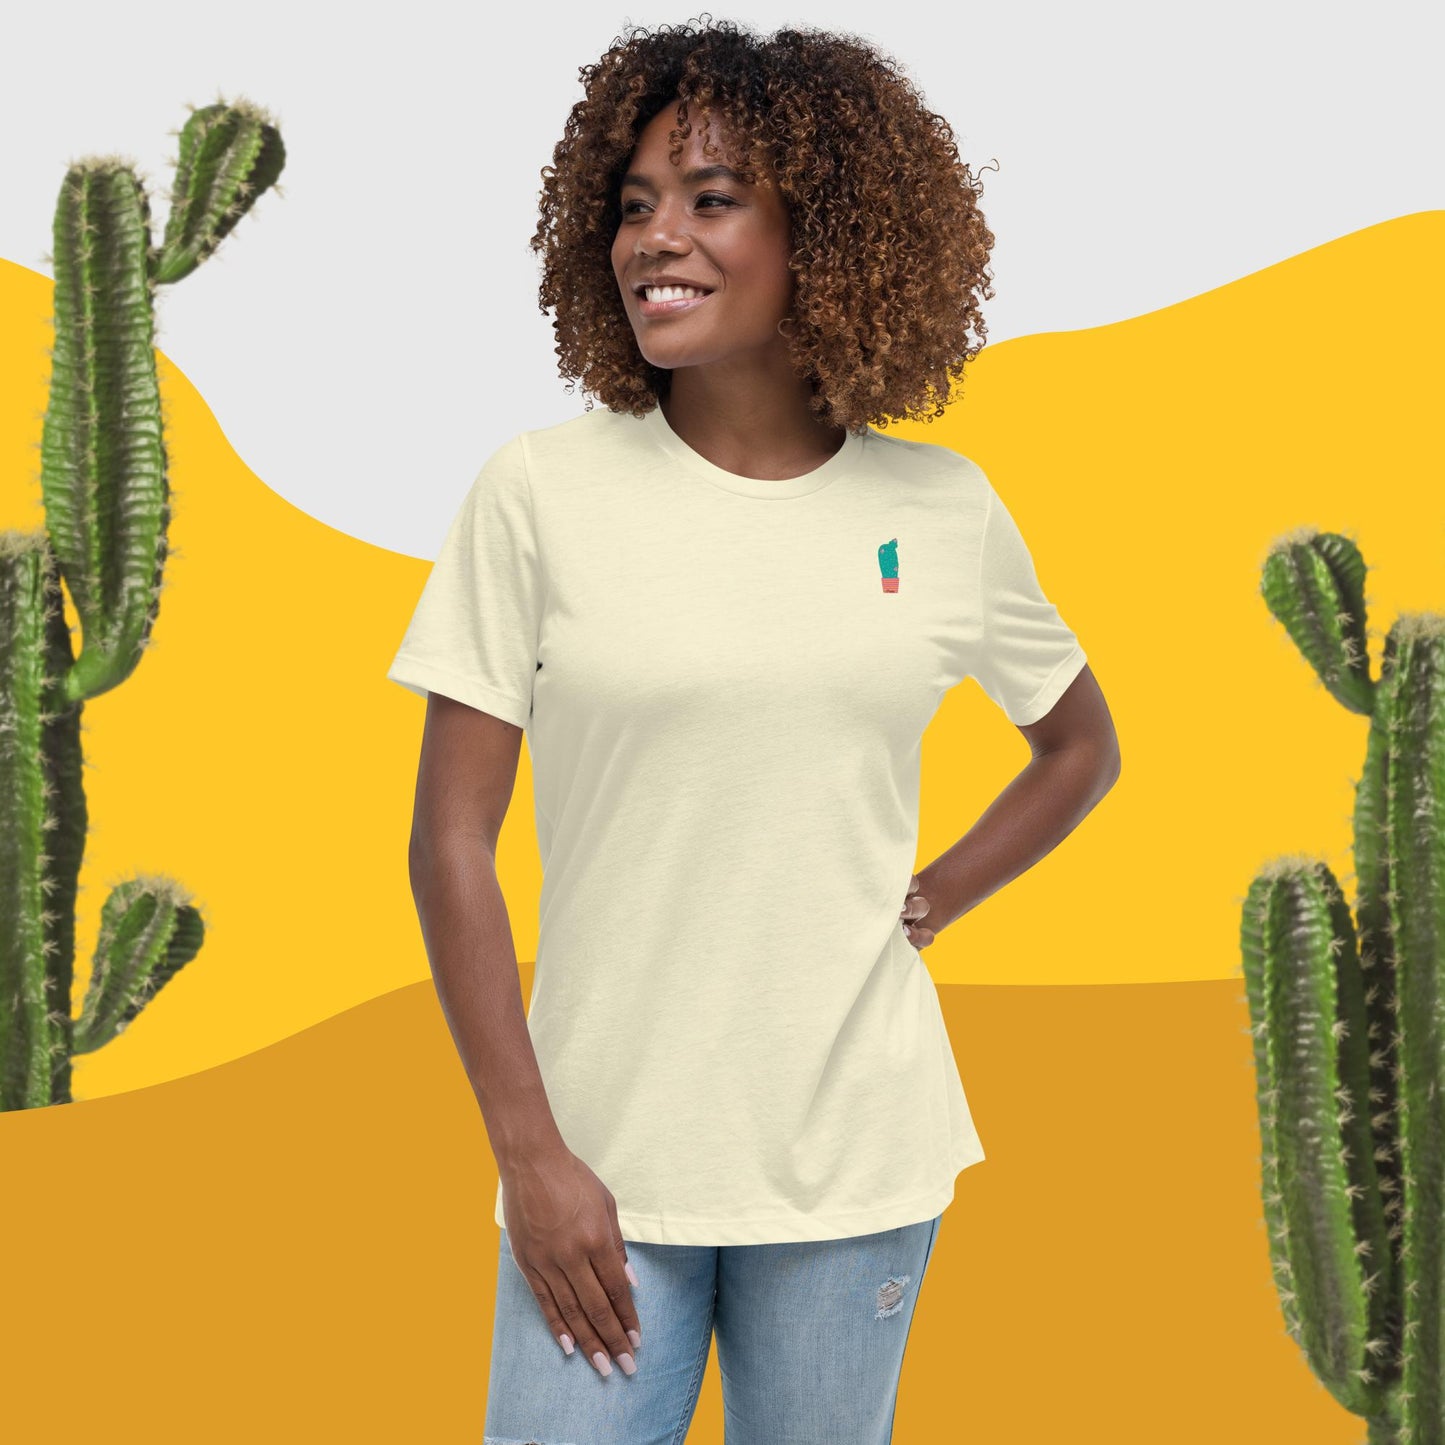 Sharp by Design 'Pricks' No.3 – Women's Relaxed T-Shirt